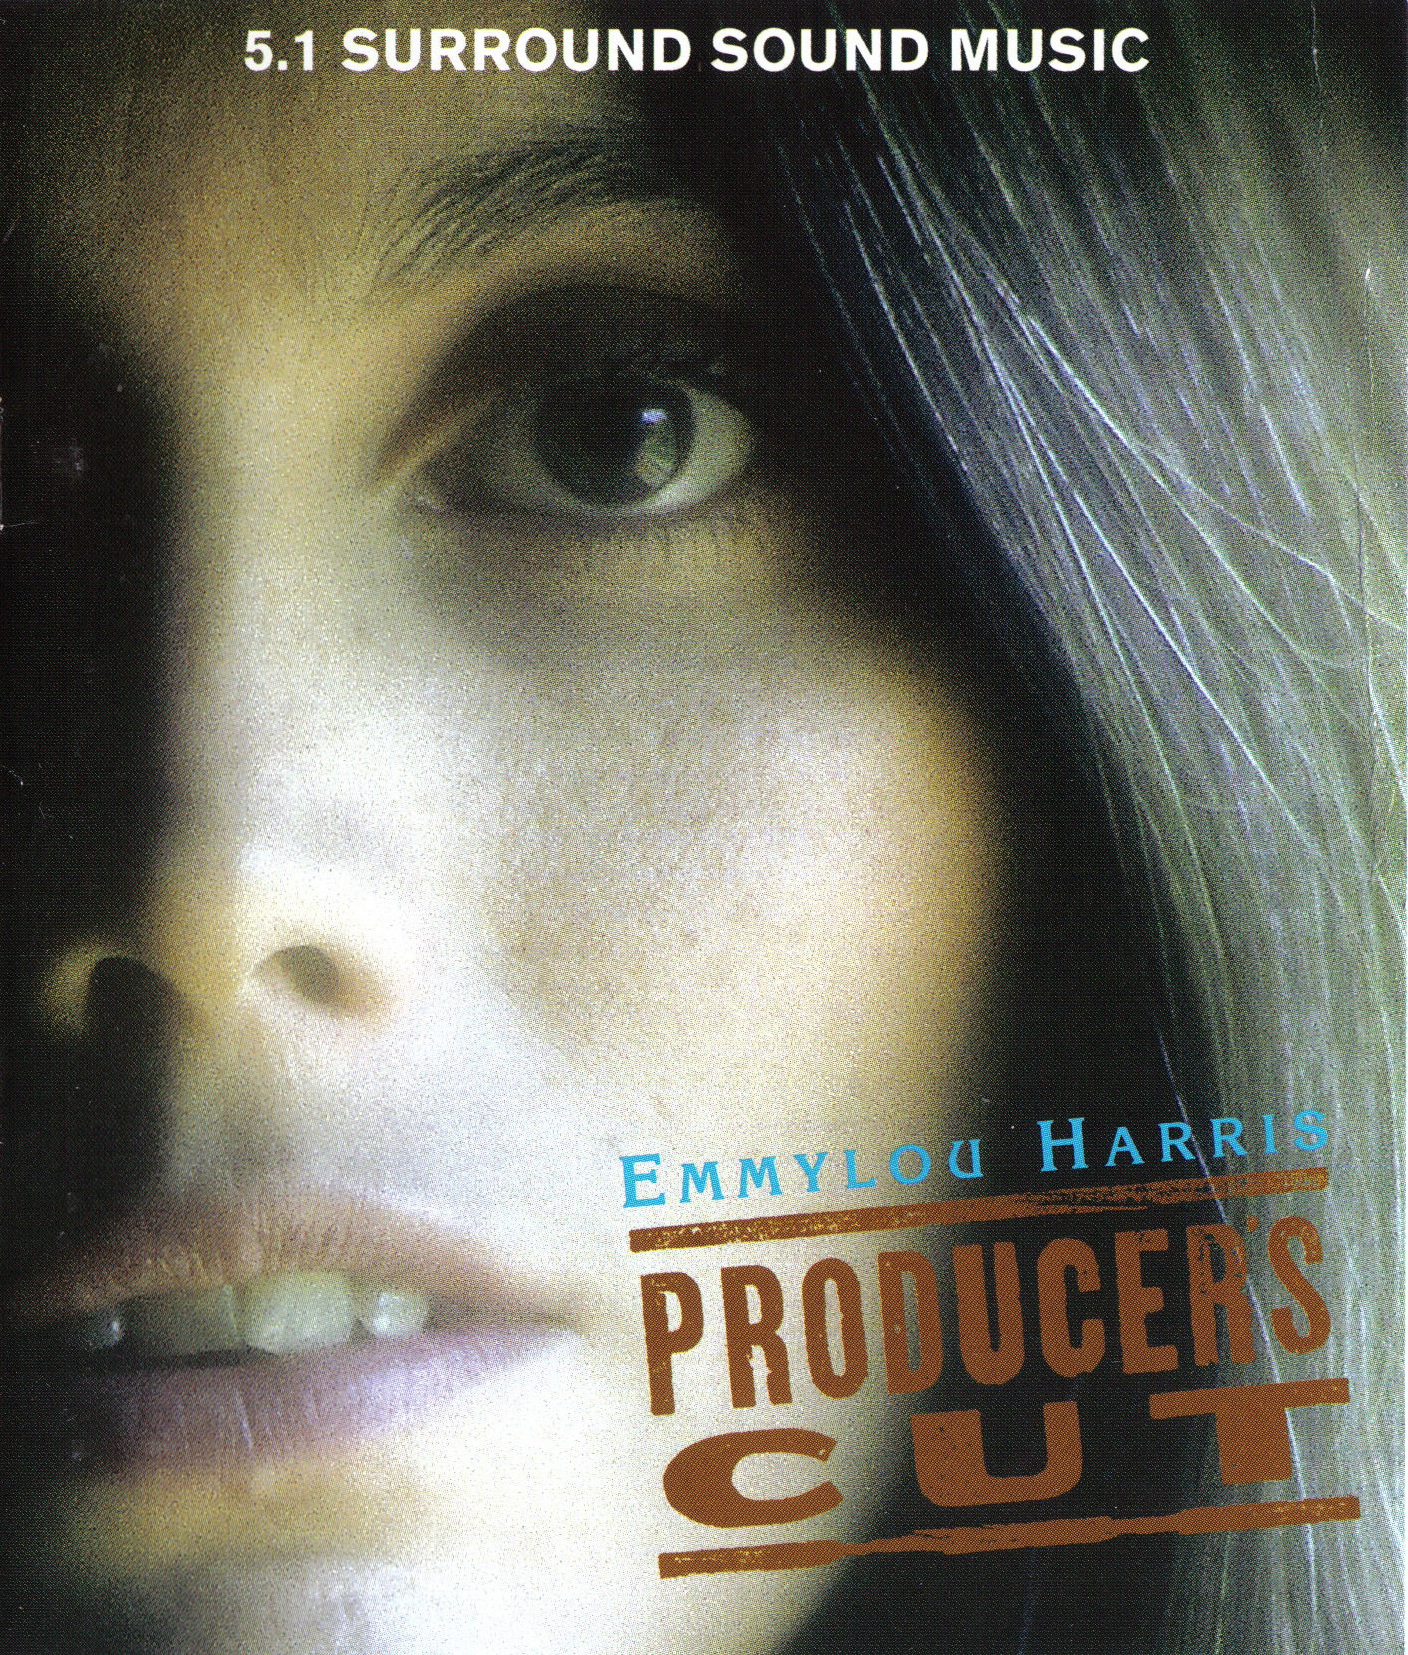 Emmylou Harris - 2002 - Producer's Cut [2002 DVD] 24-96